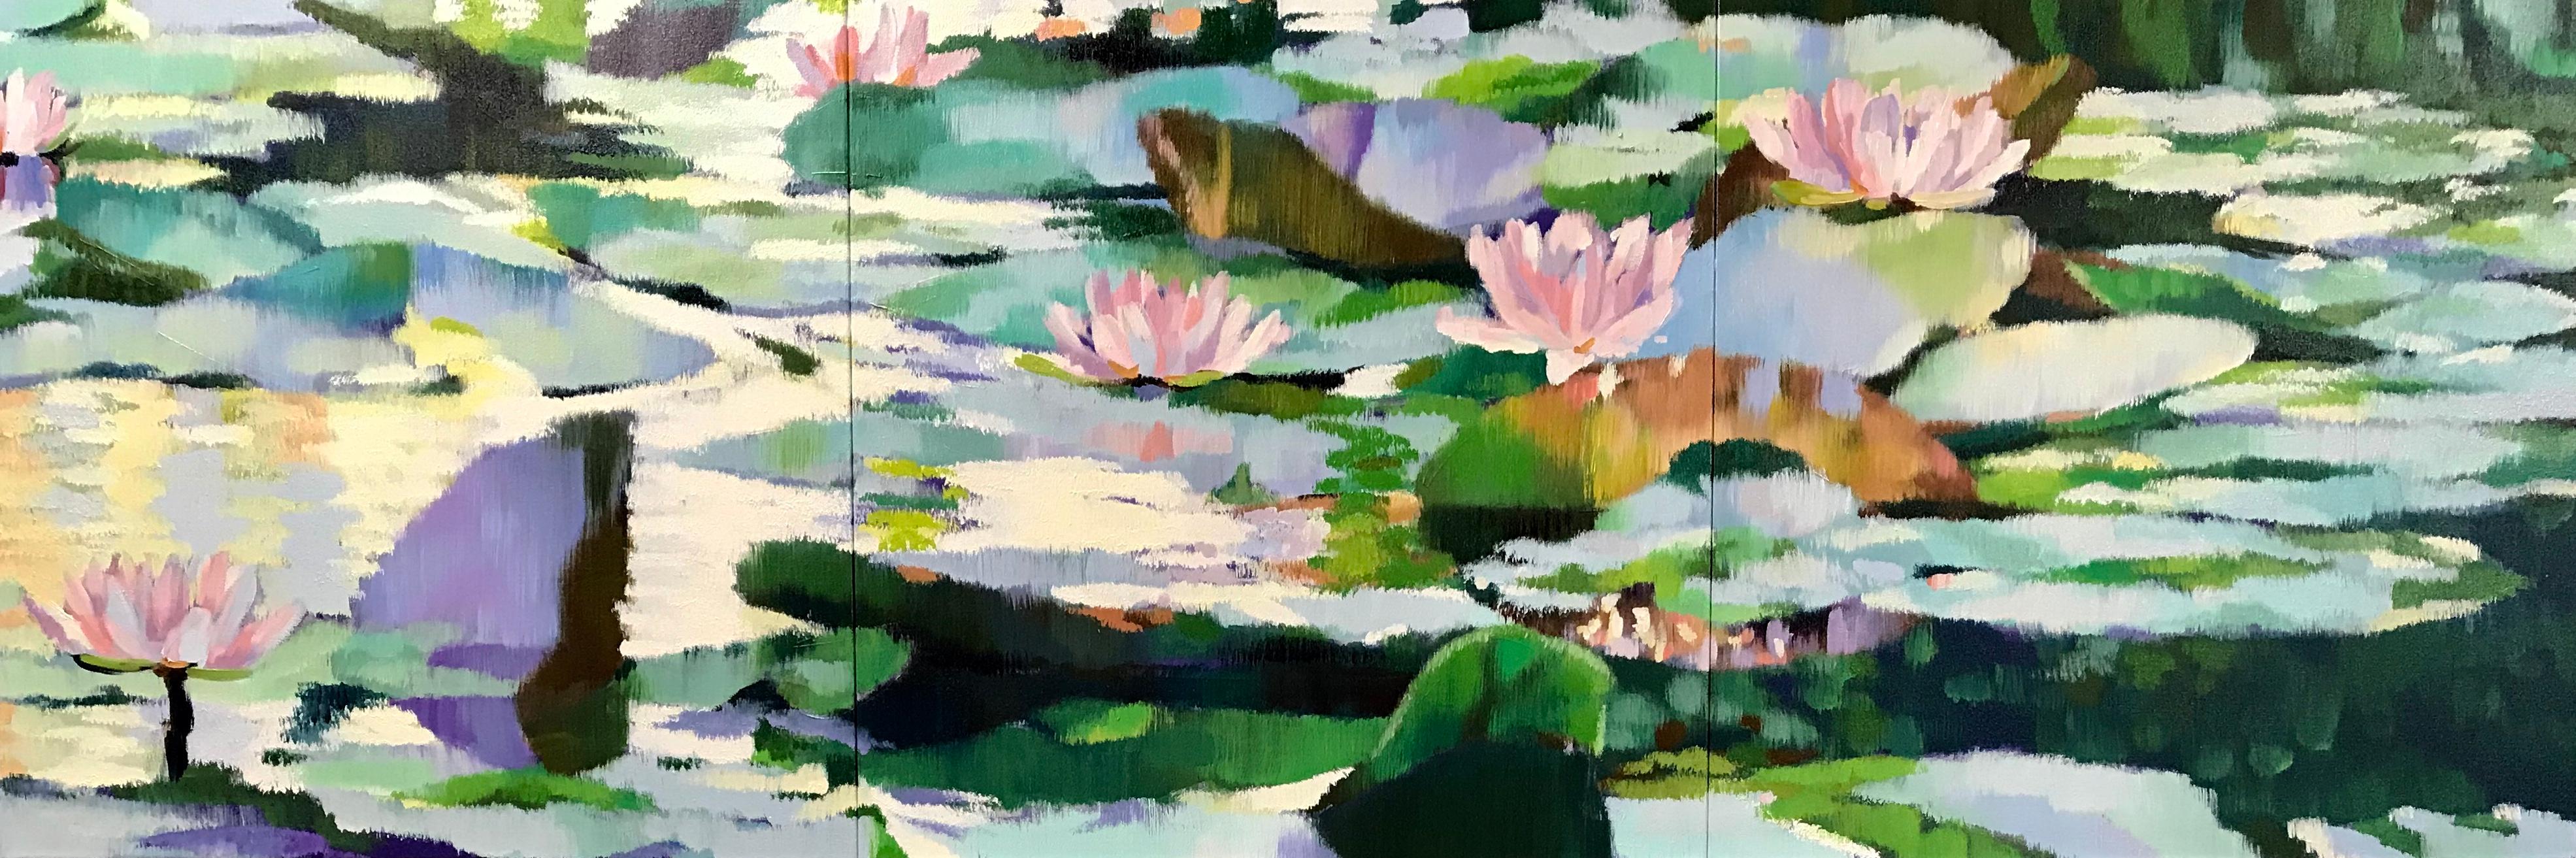 Jill Hackney Landscape Painting - GIVERNY XII